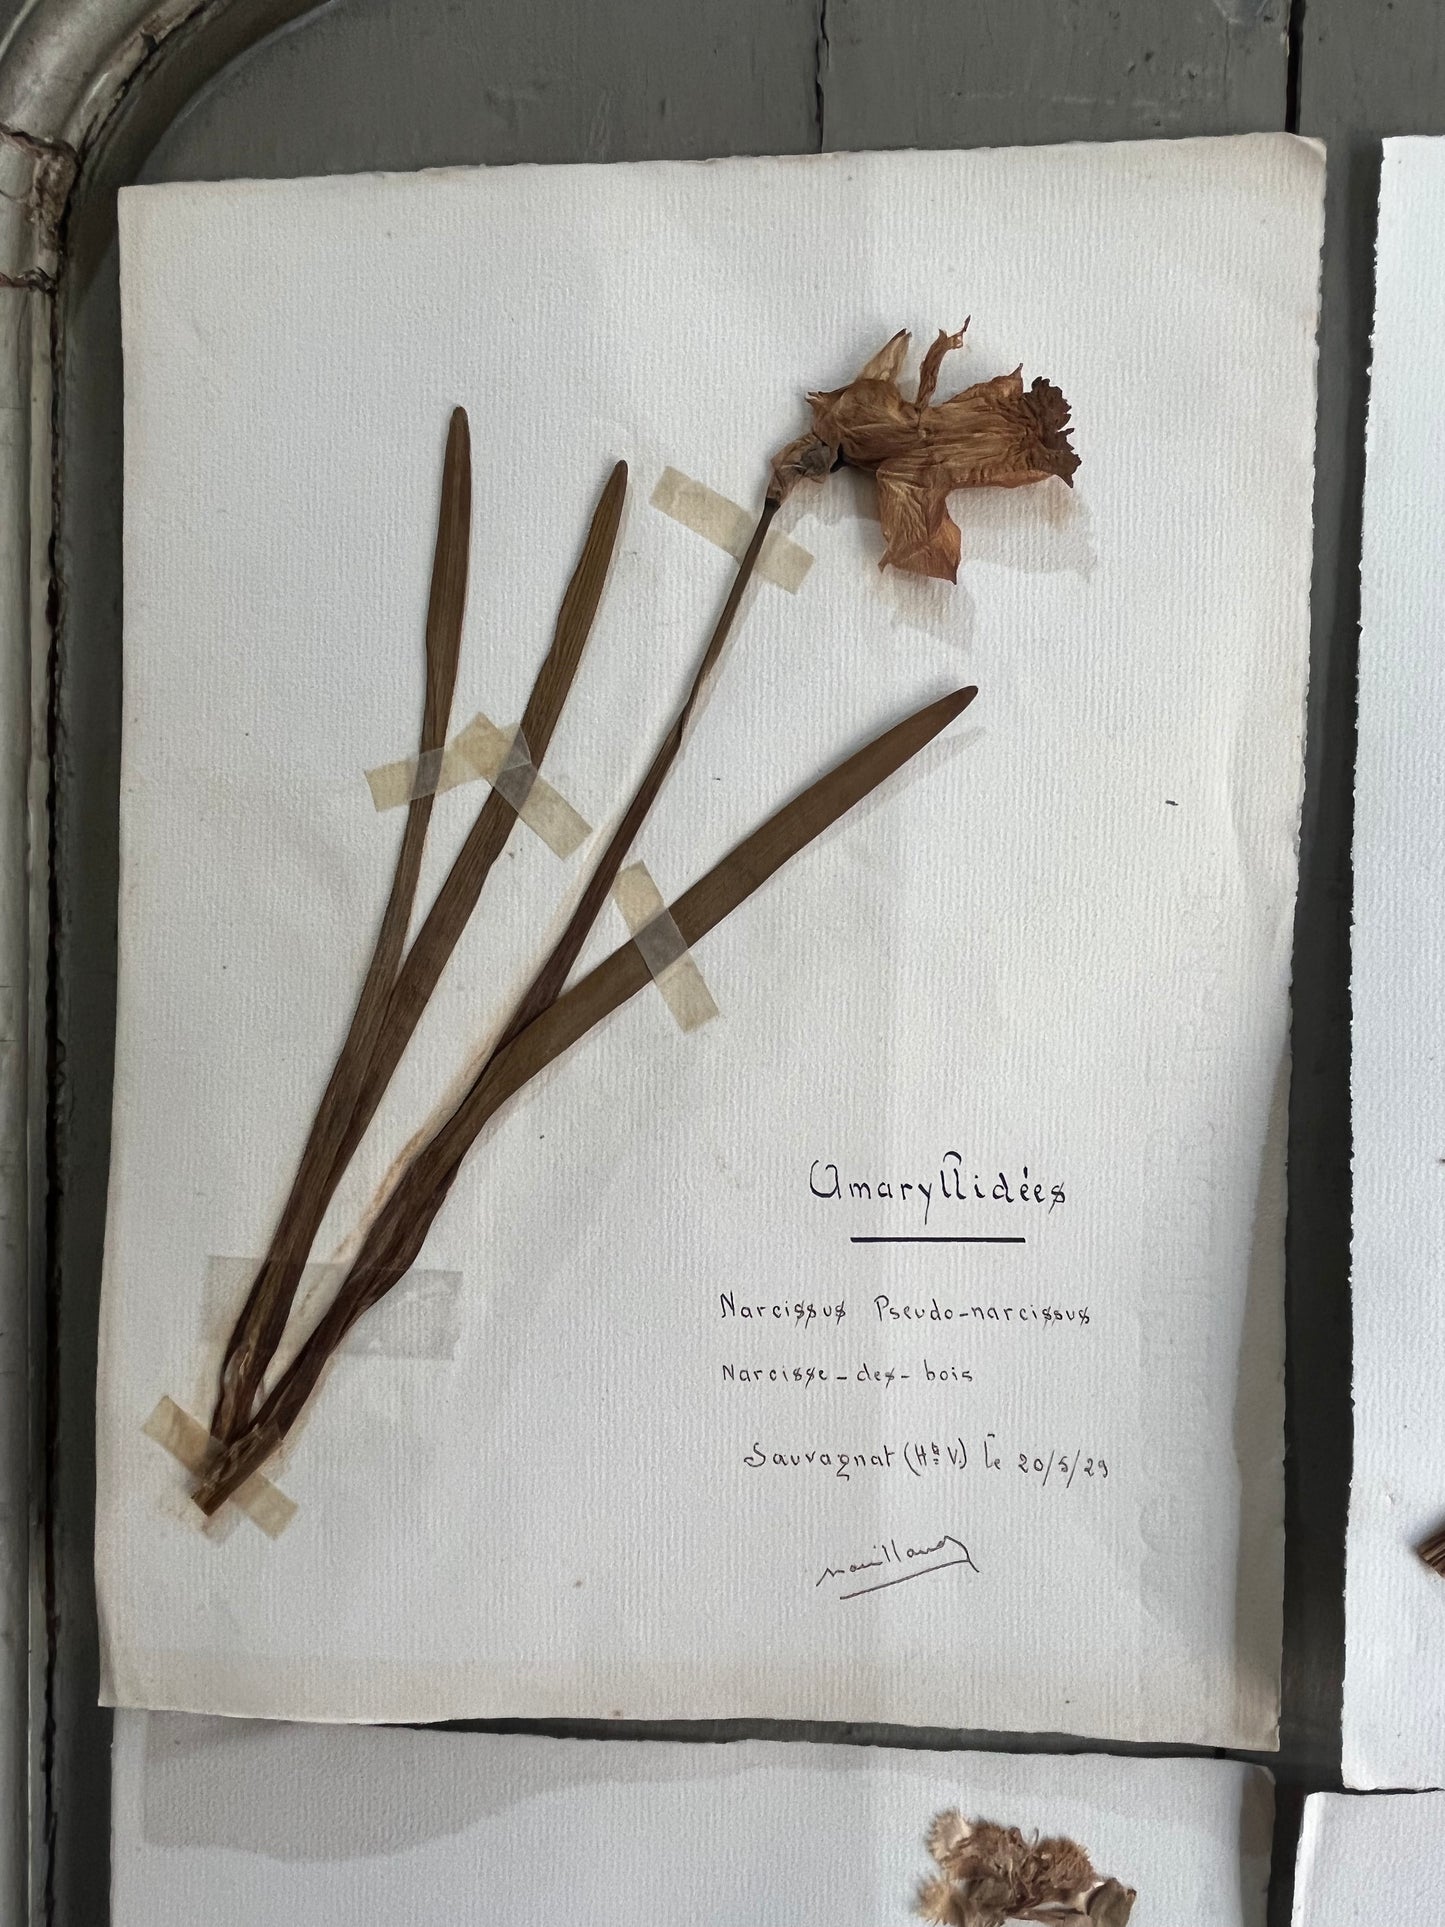 Set 6 botanical specimens